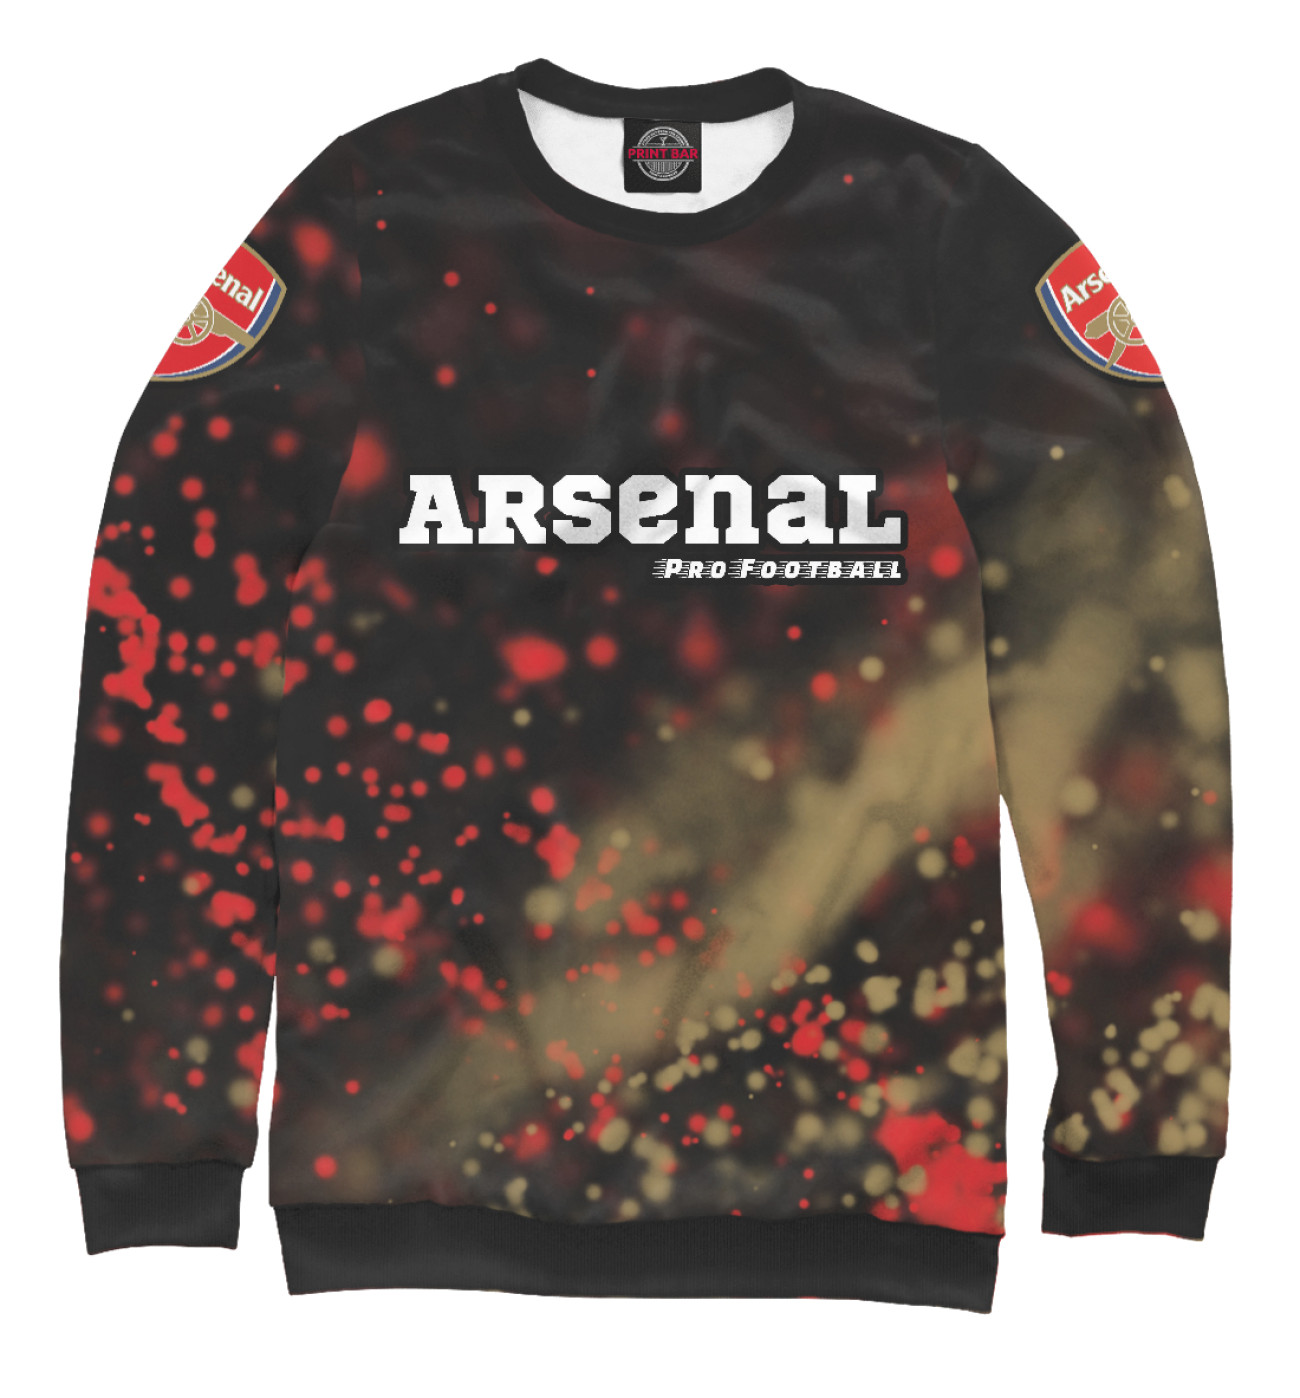 Женский Свитшот Arsenal | Arsenal Pro Football, артикул: ARS-477767-swi-1